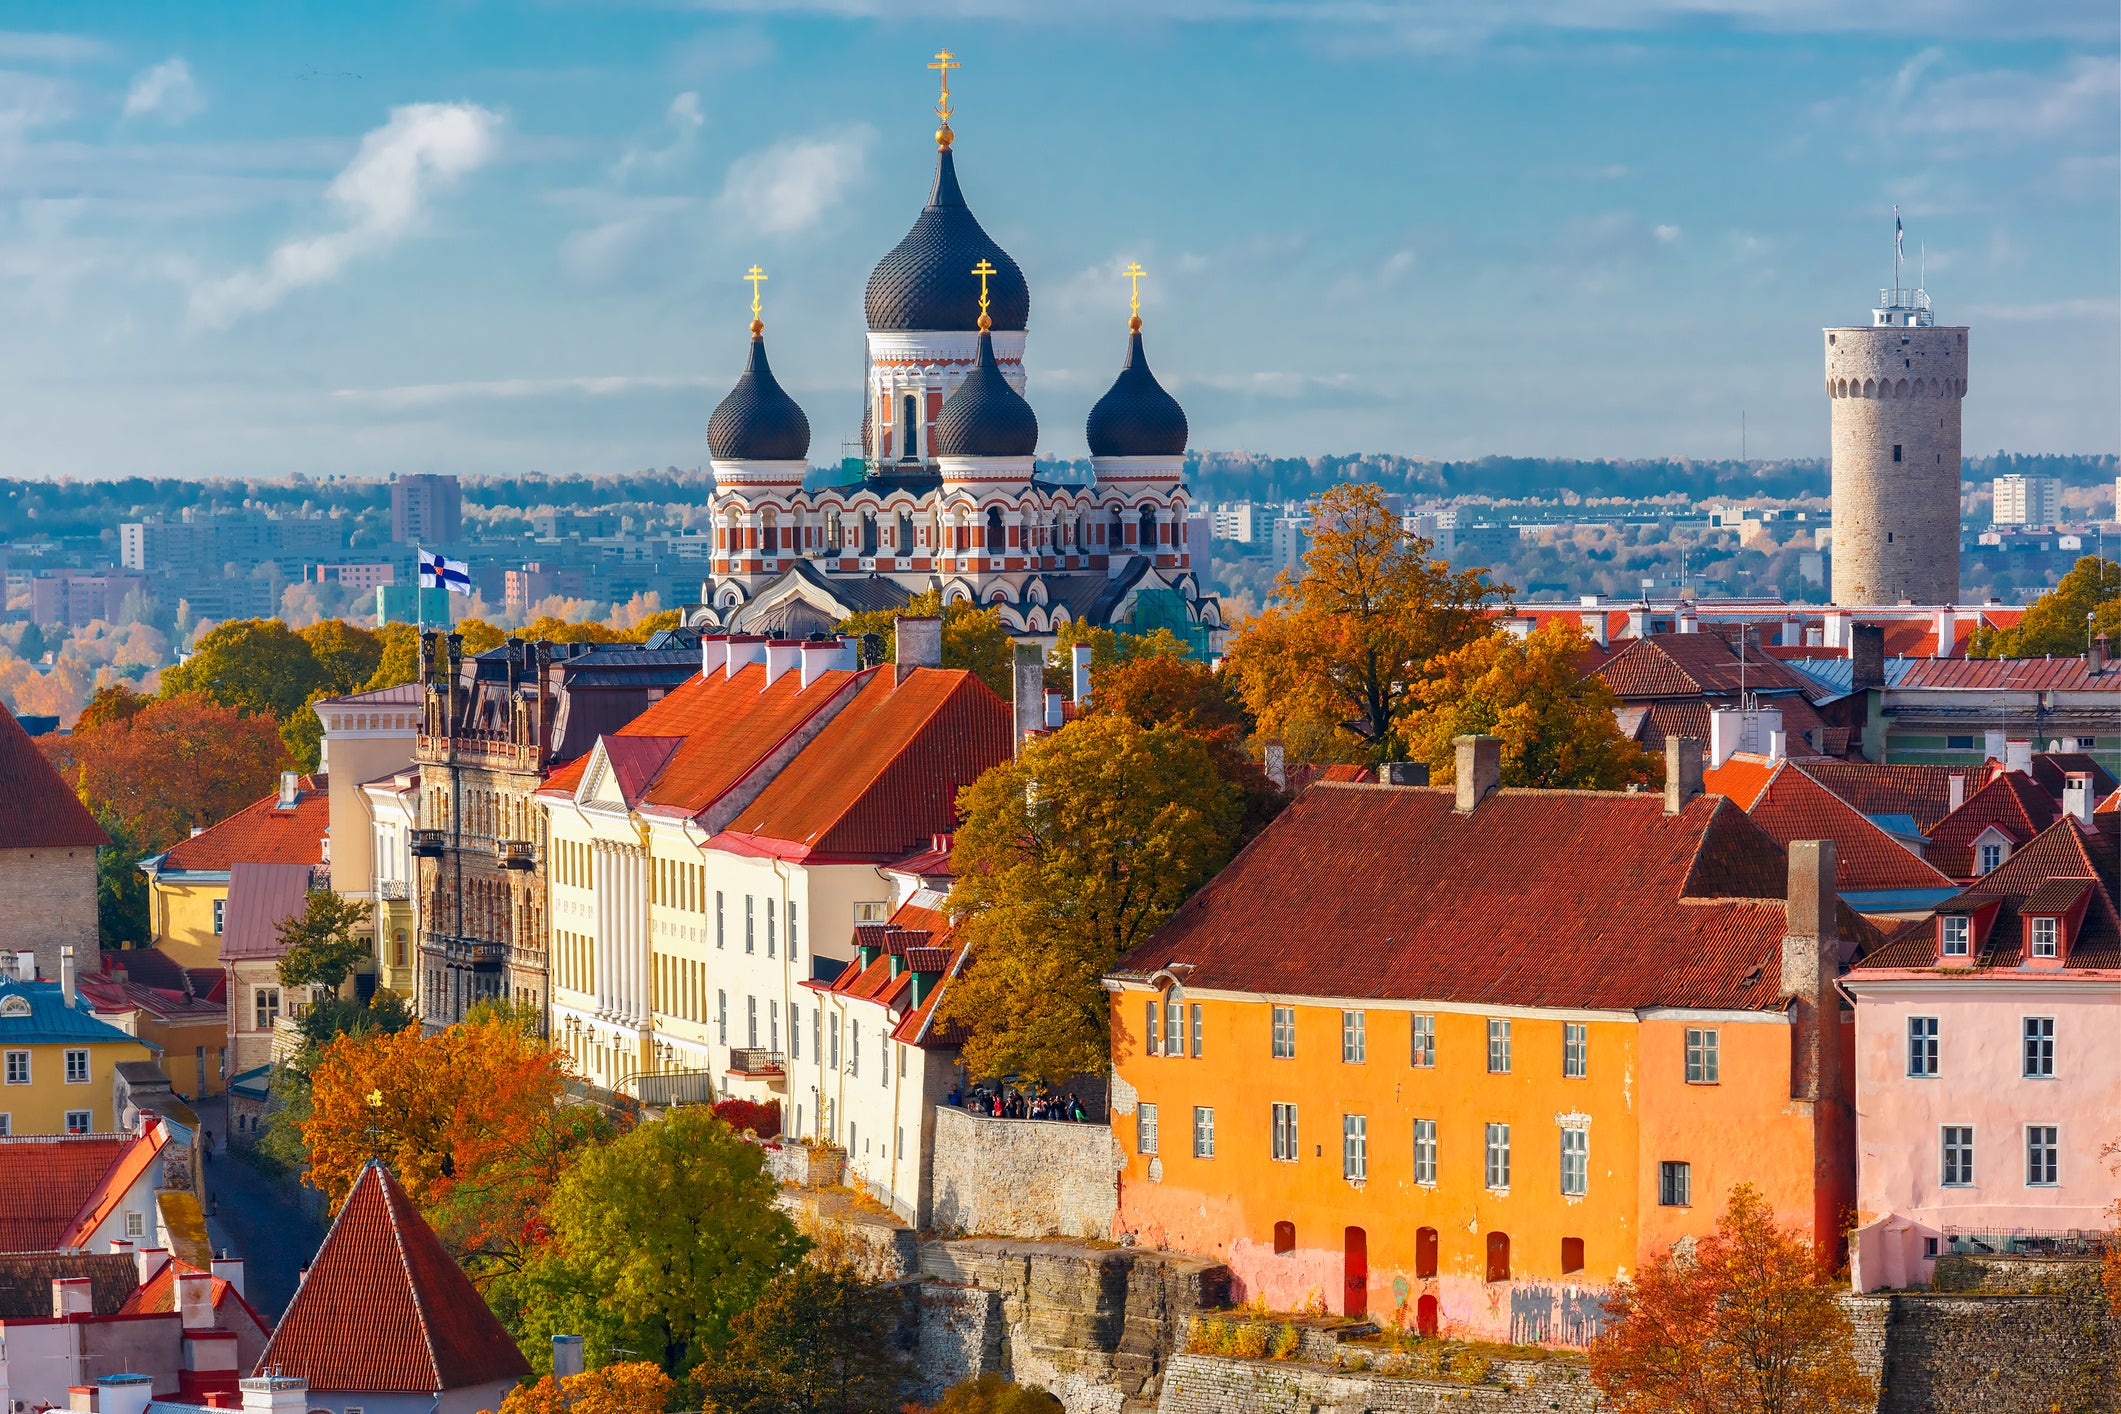 Tallinn in Estonia